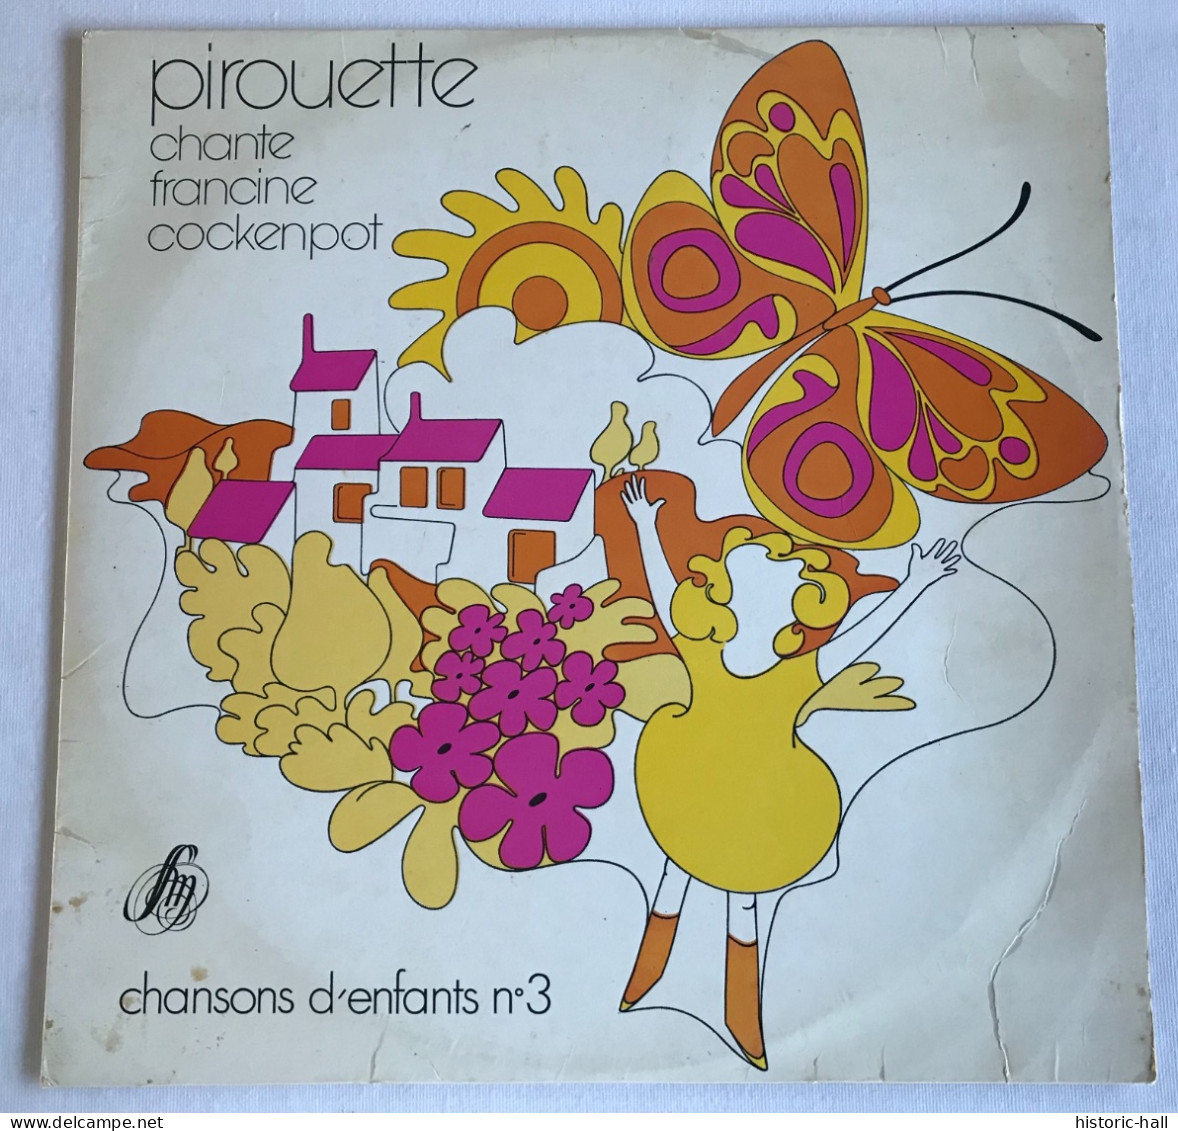 PIROUETTE - Chante Francine Cockenpot - LP - 1972 - French Press - Kinderlieder